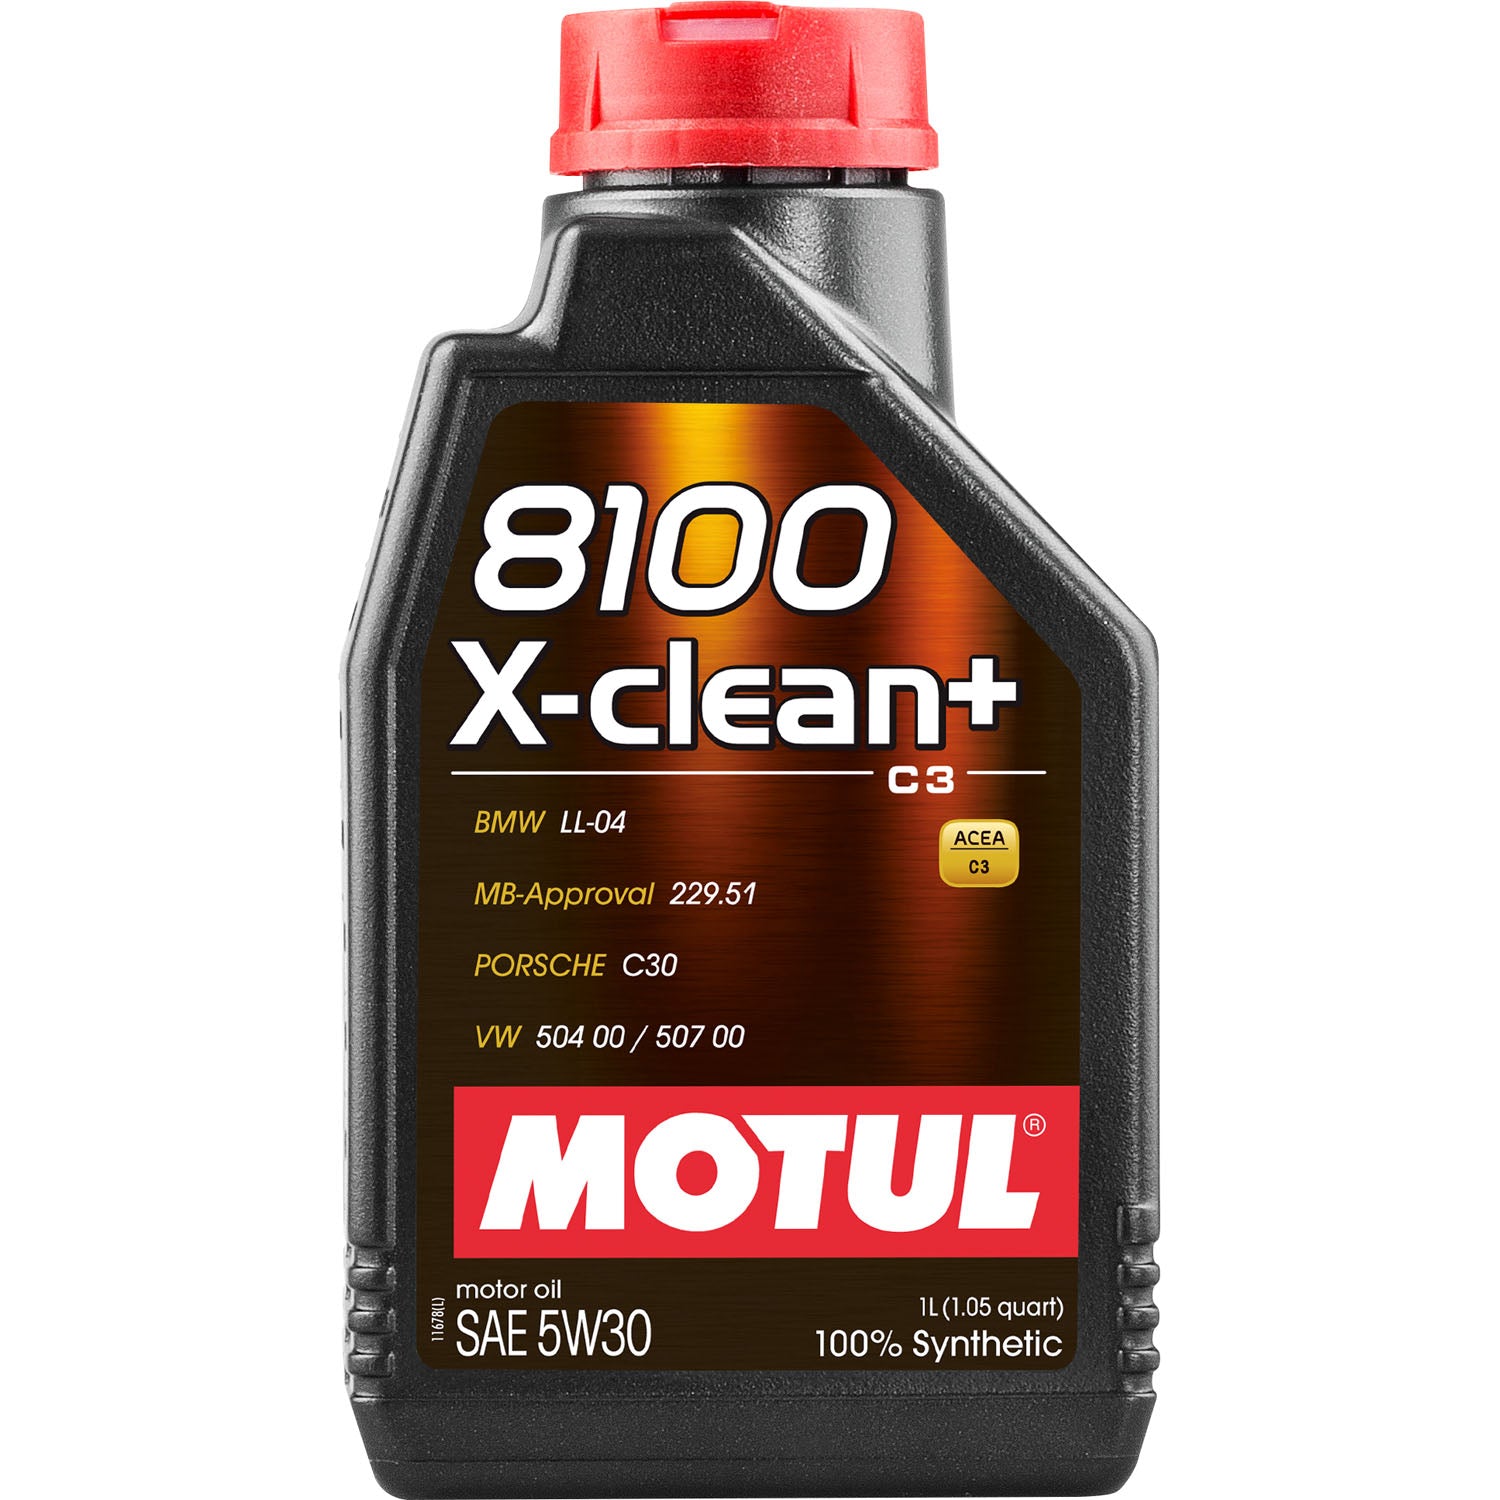 Motul 8100 X-Clean+ Synthetic Engine Motor Oil 5W30 - 1 Liter